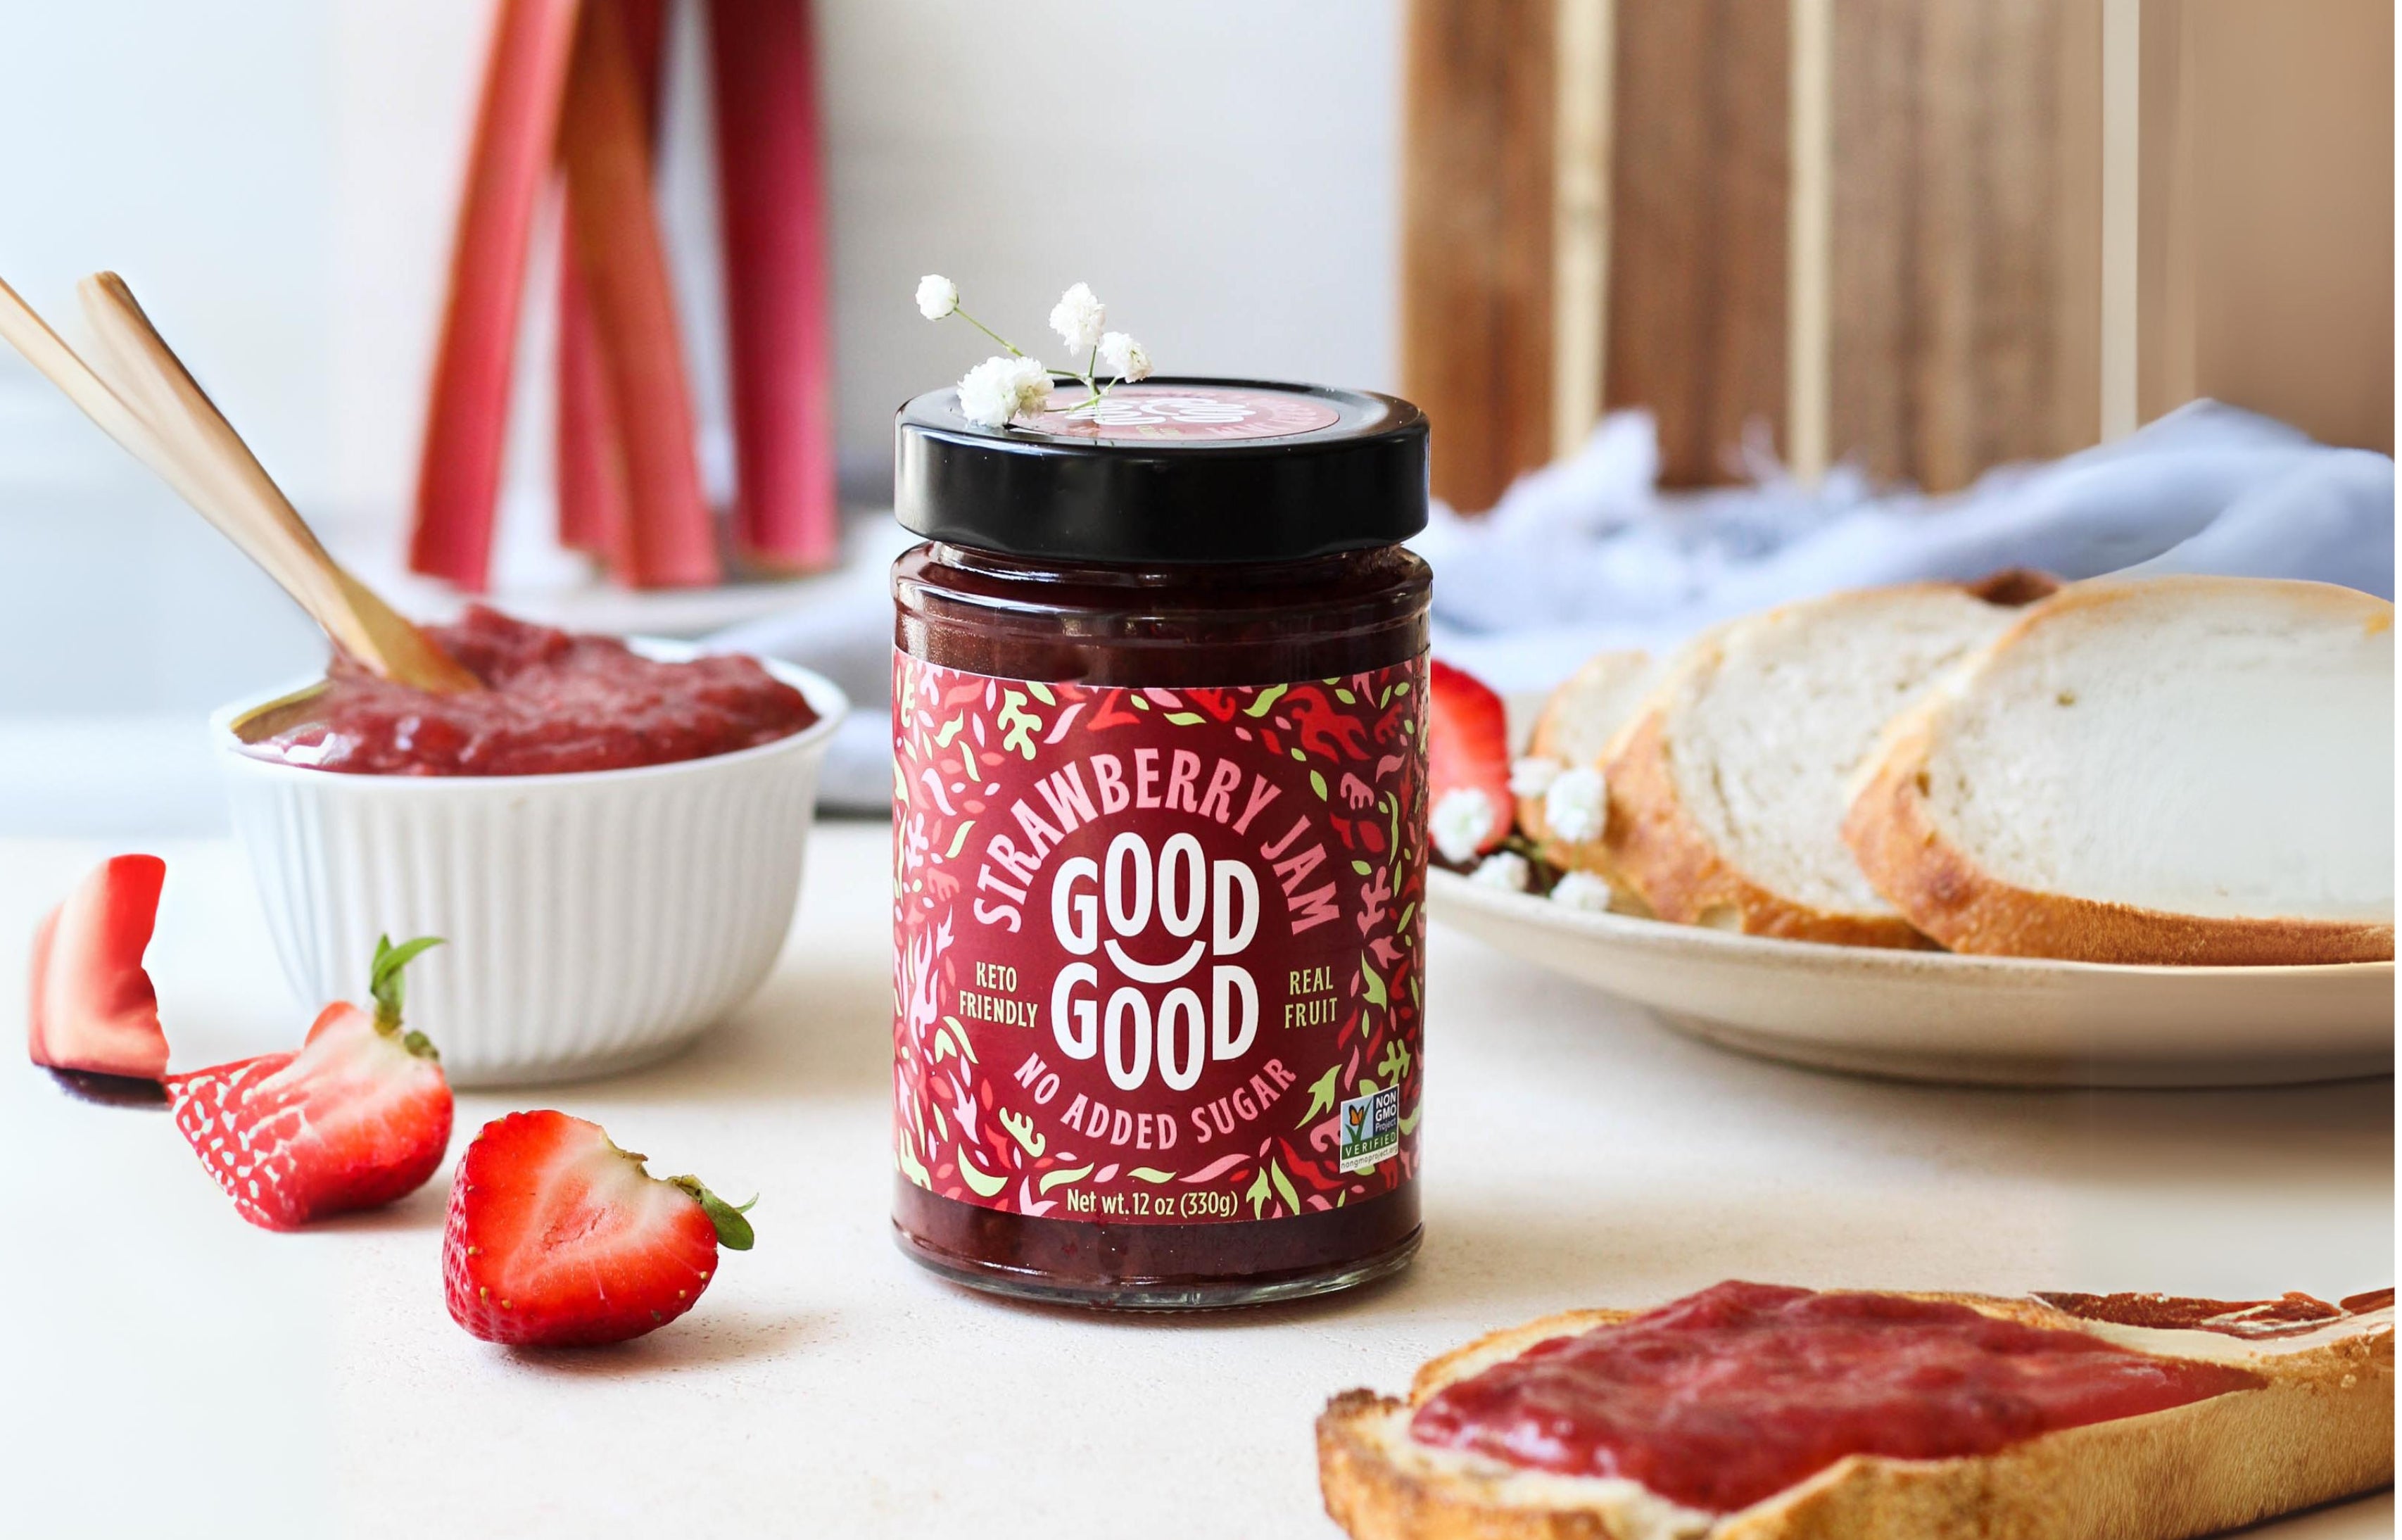 GOOD GOOD Strawberry Jam with Rhubarb